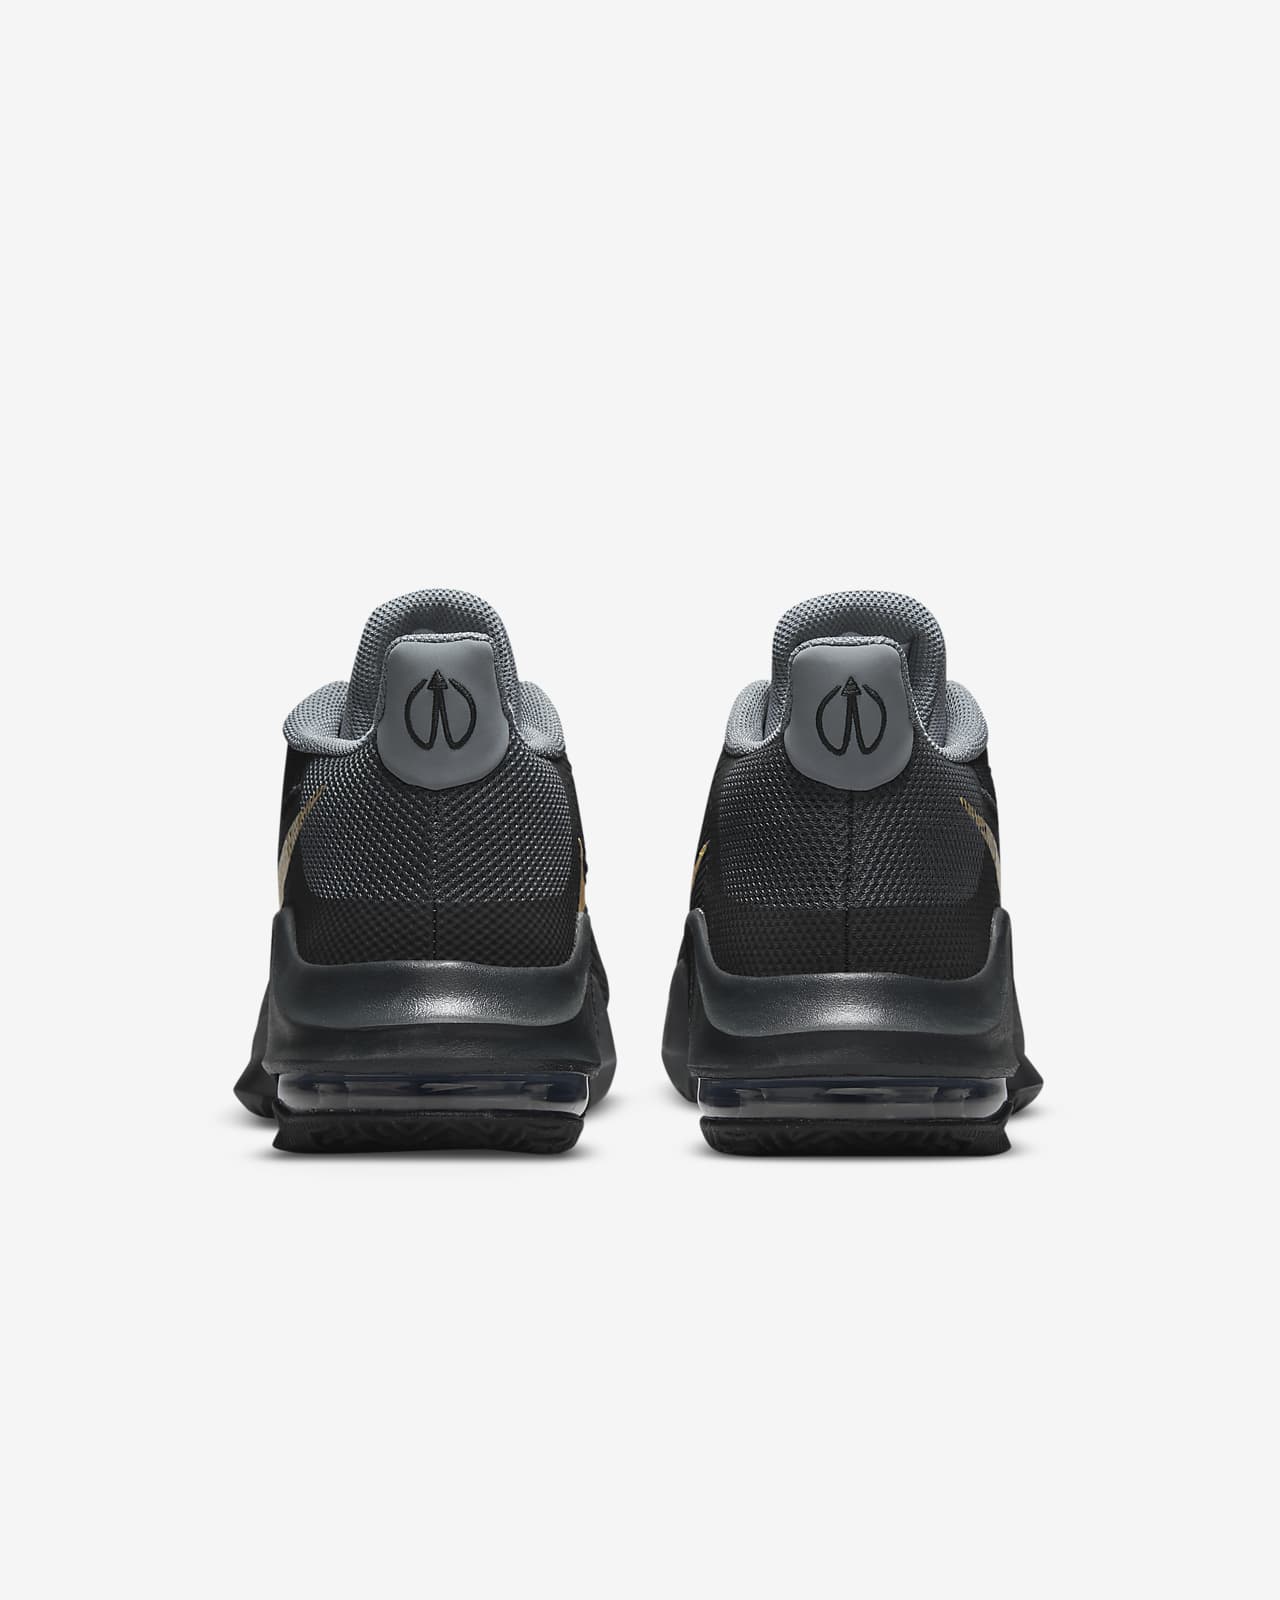 whistle Decipher Will Nike Air Max Impact 3 Basketball Shoe. Nike LU